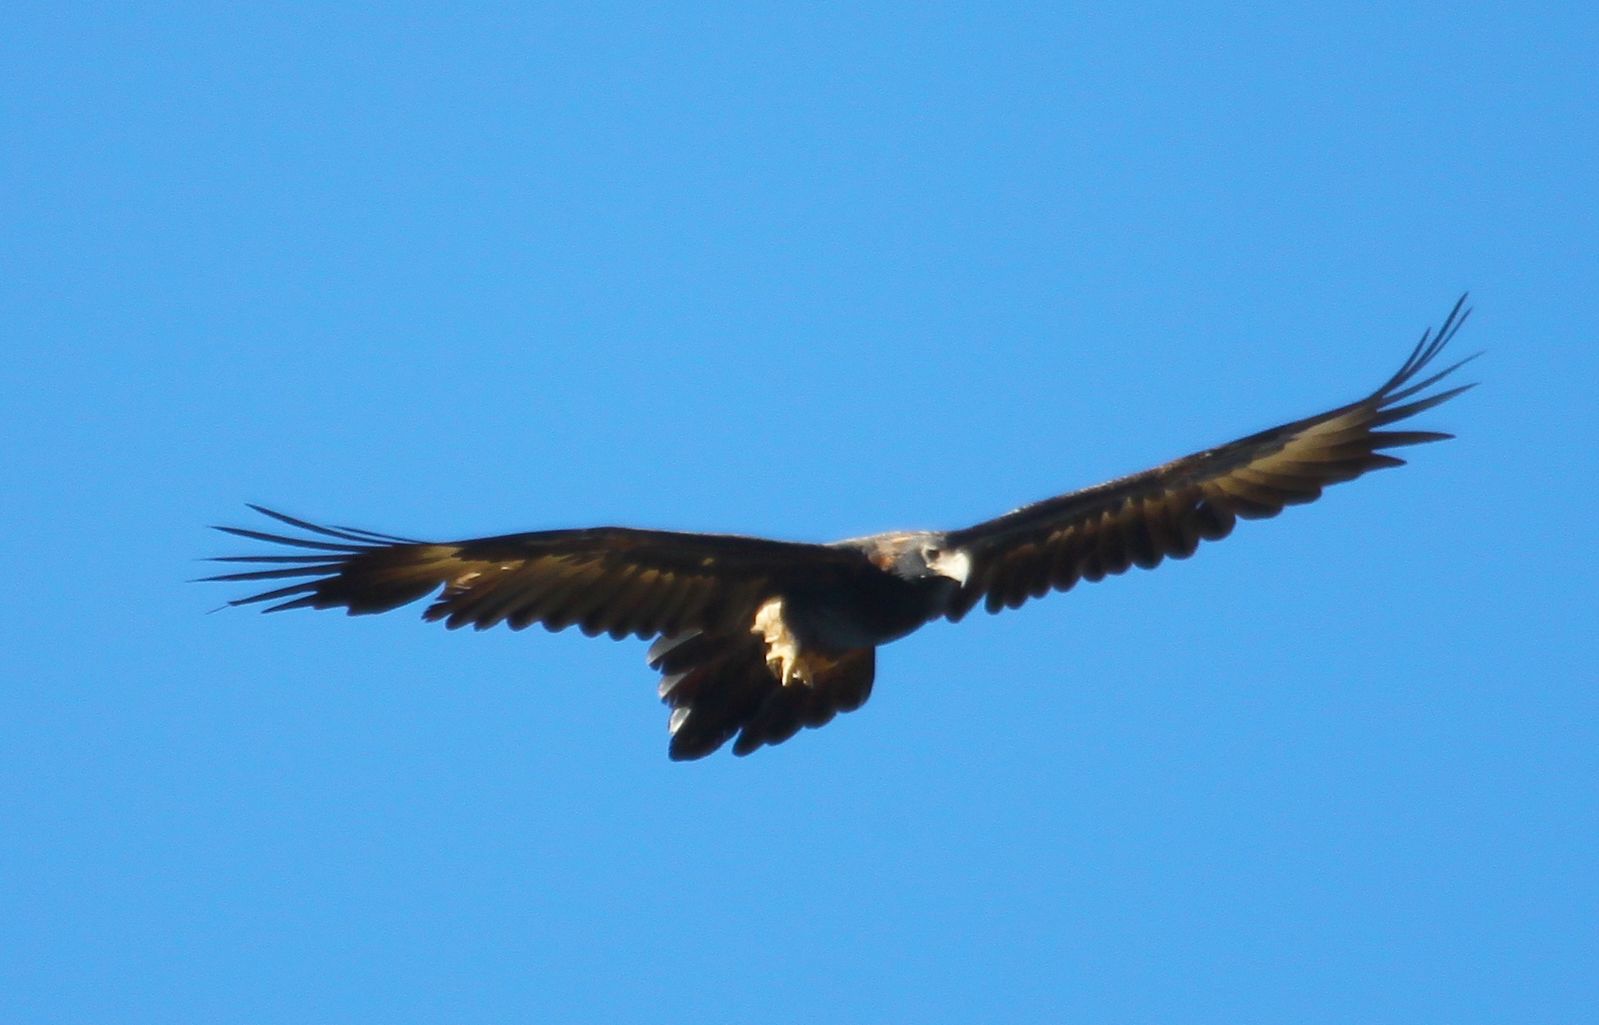 Richard Waring's Birds of Australia: Wedge-tailed Eagles in flight